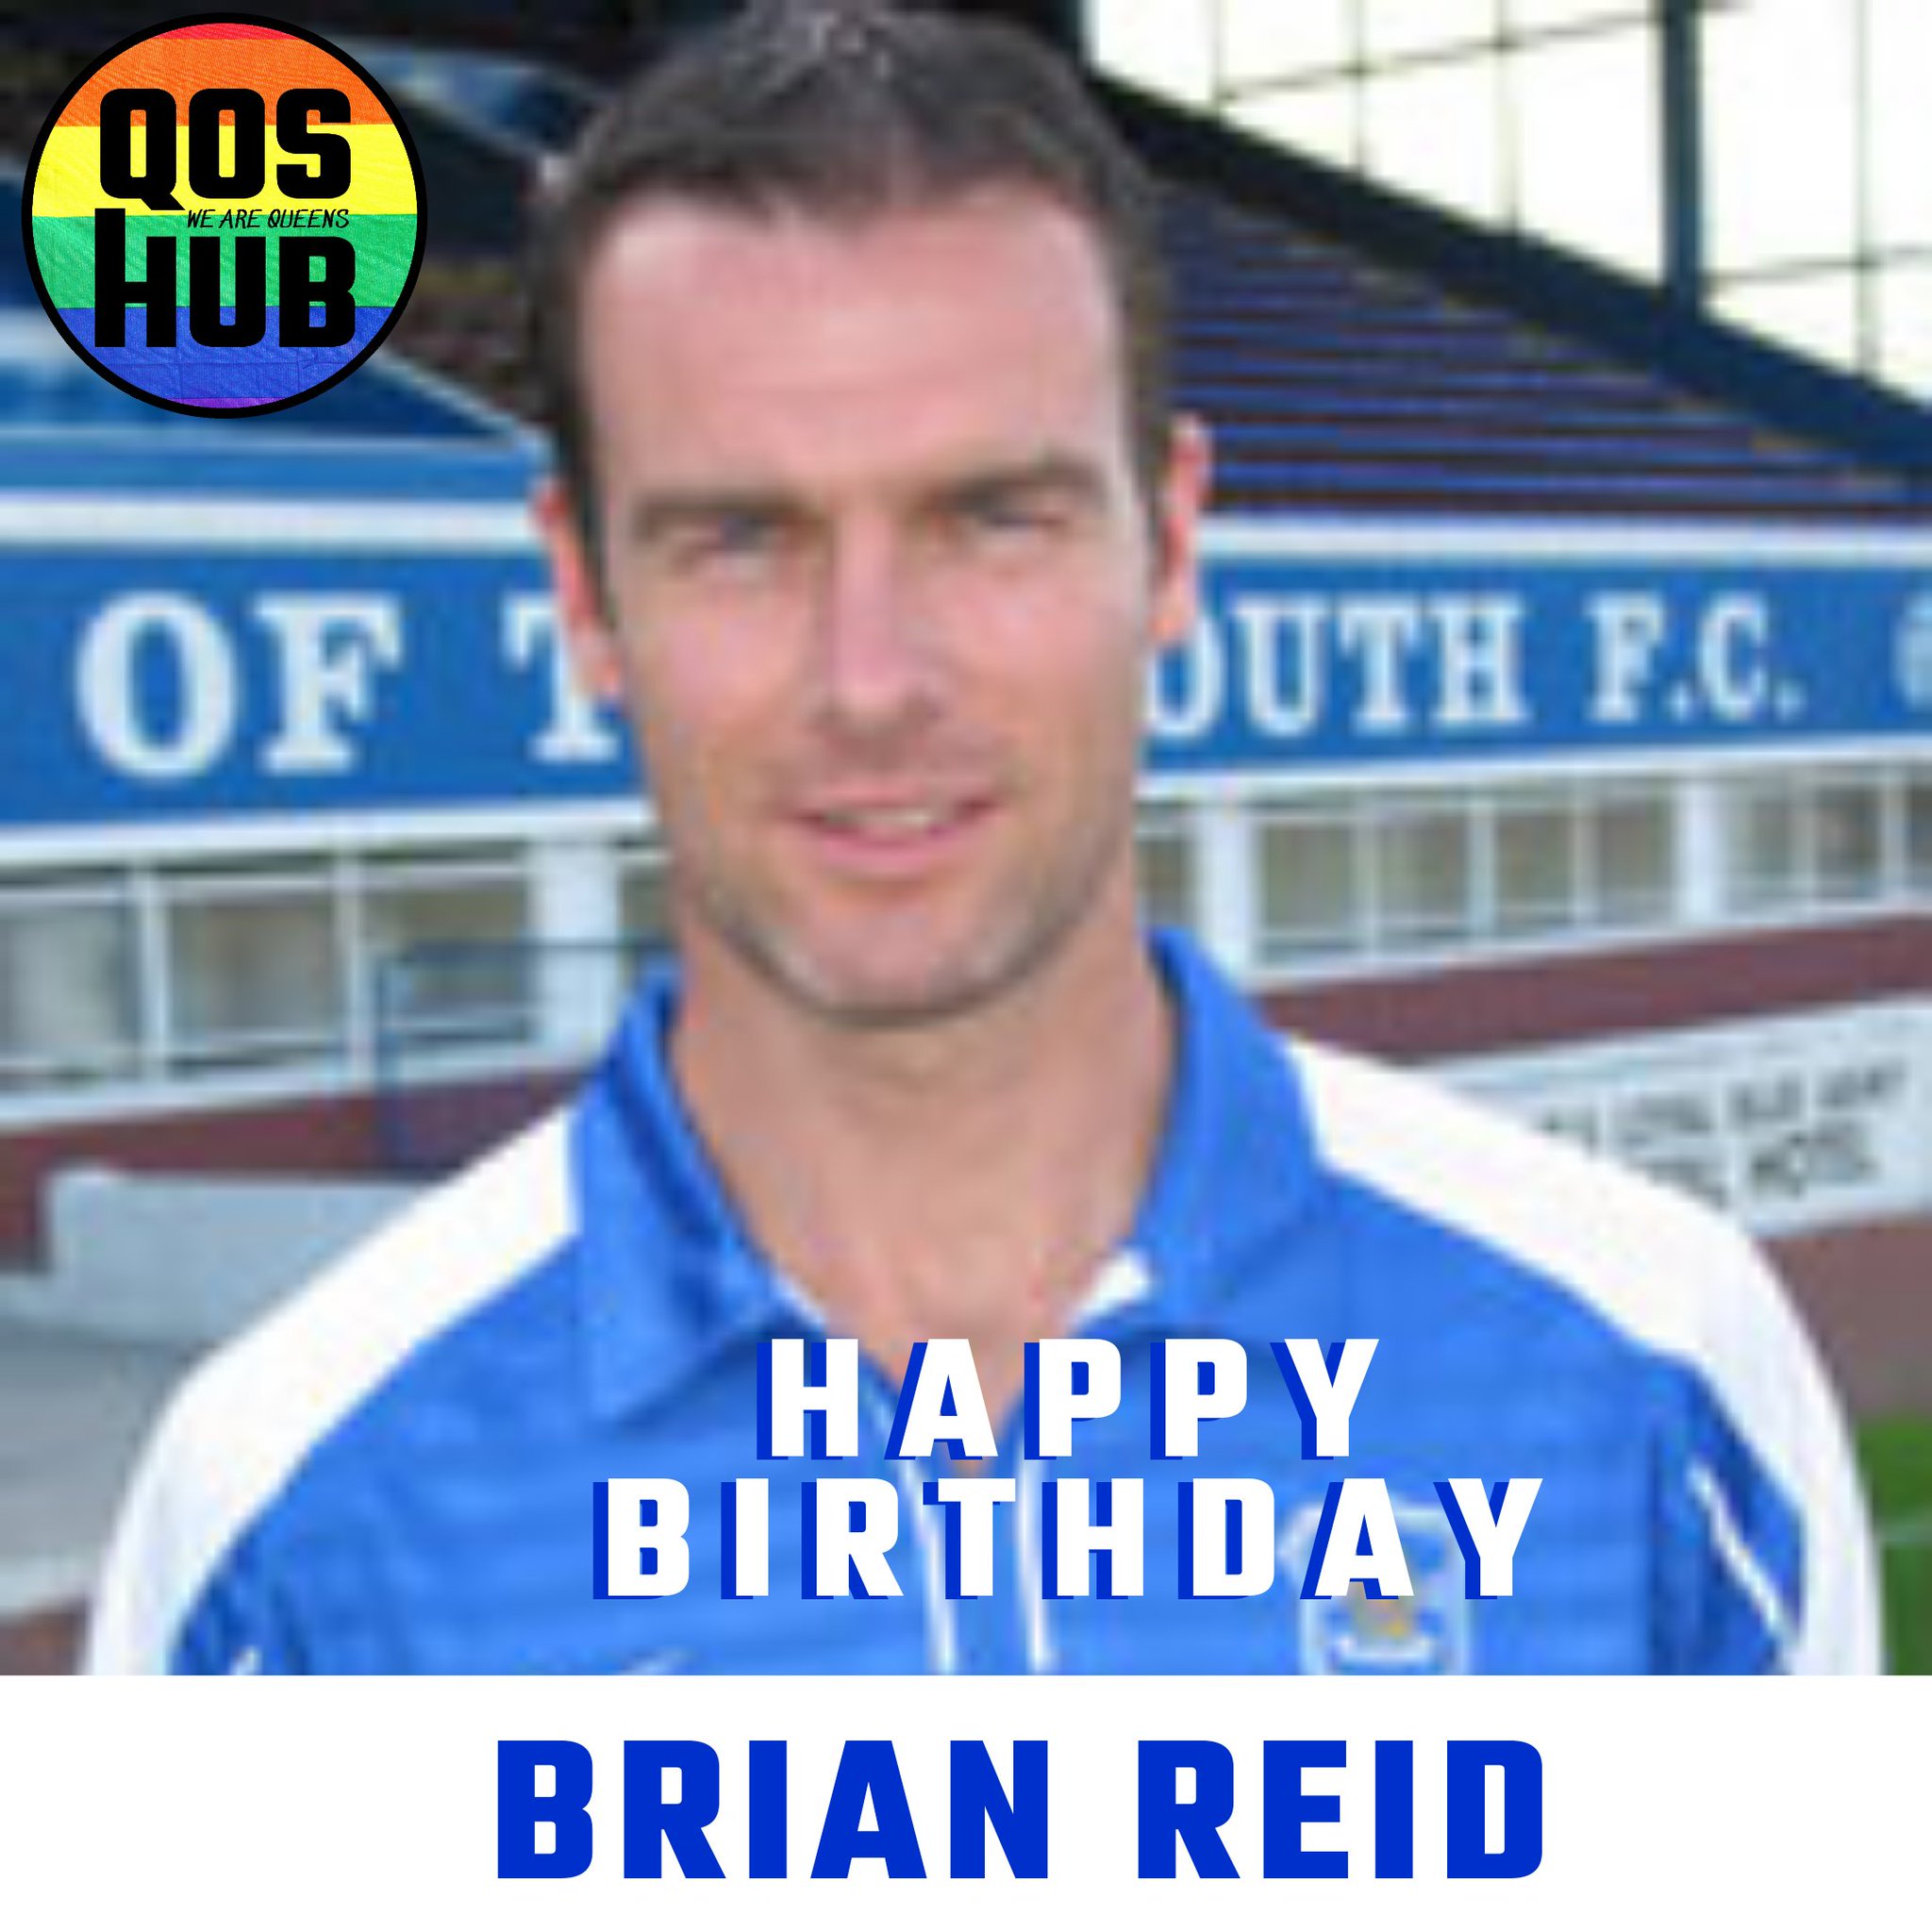  Birthday Former player Brian Reid, celebrates his 50th birthday today! Happy birthday. 